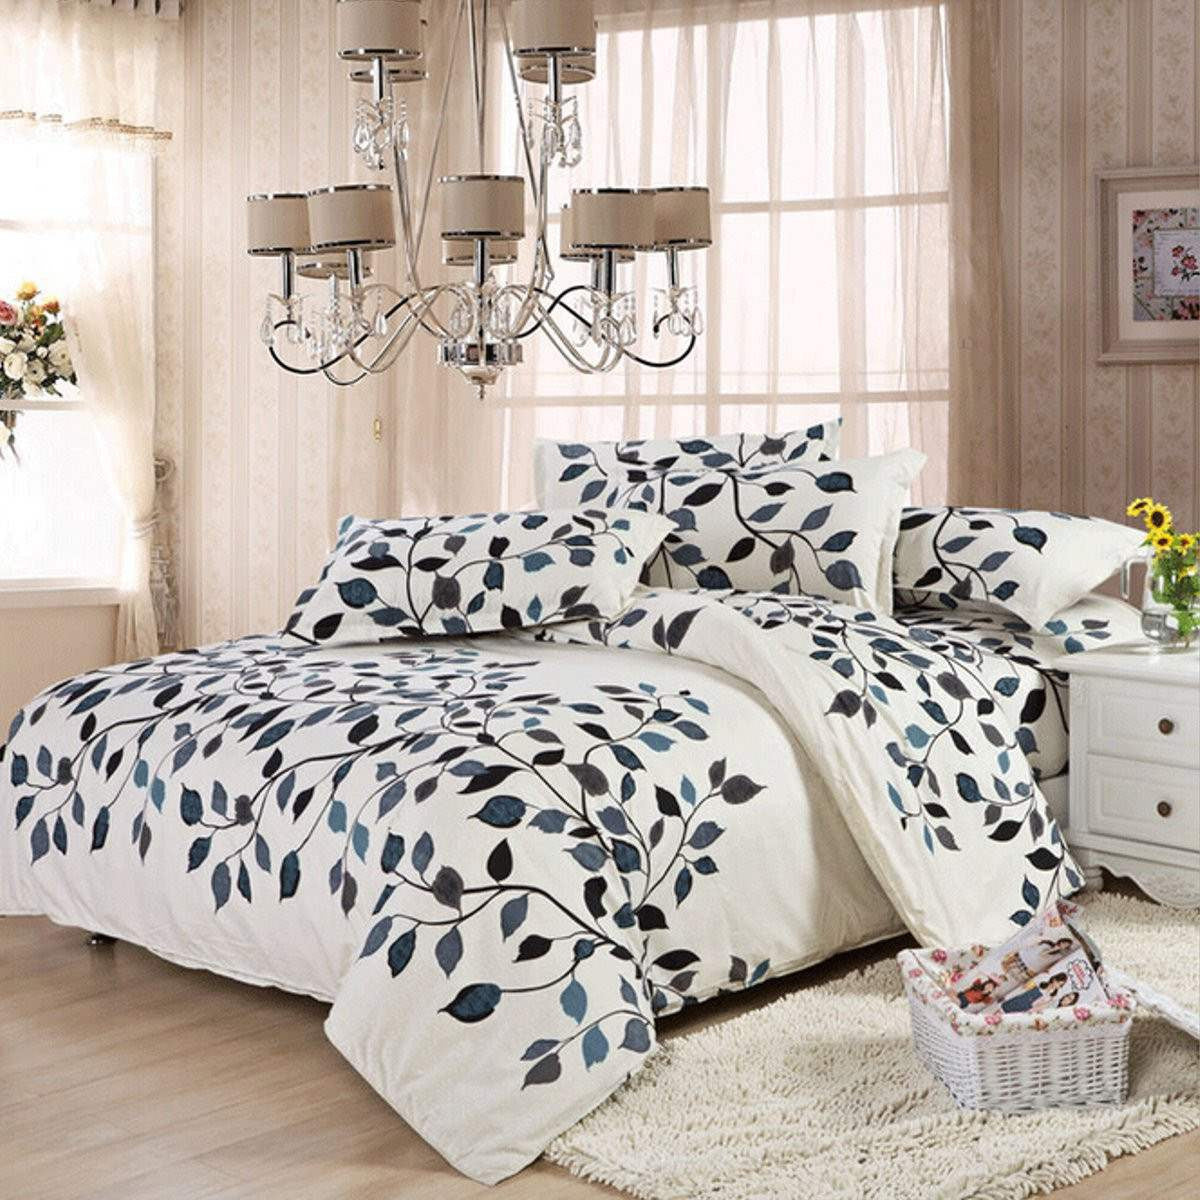 Online discount shop Australia - Duvet Cover Bedding sets Family Designer Pillow Case Quilt Cover Sheets Single Double King All Size Home el